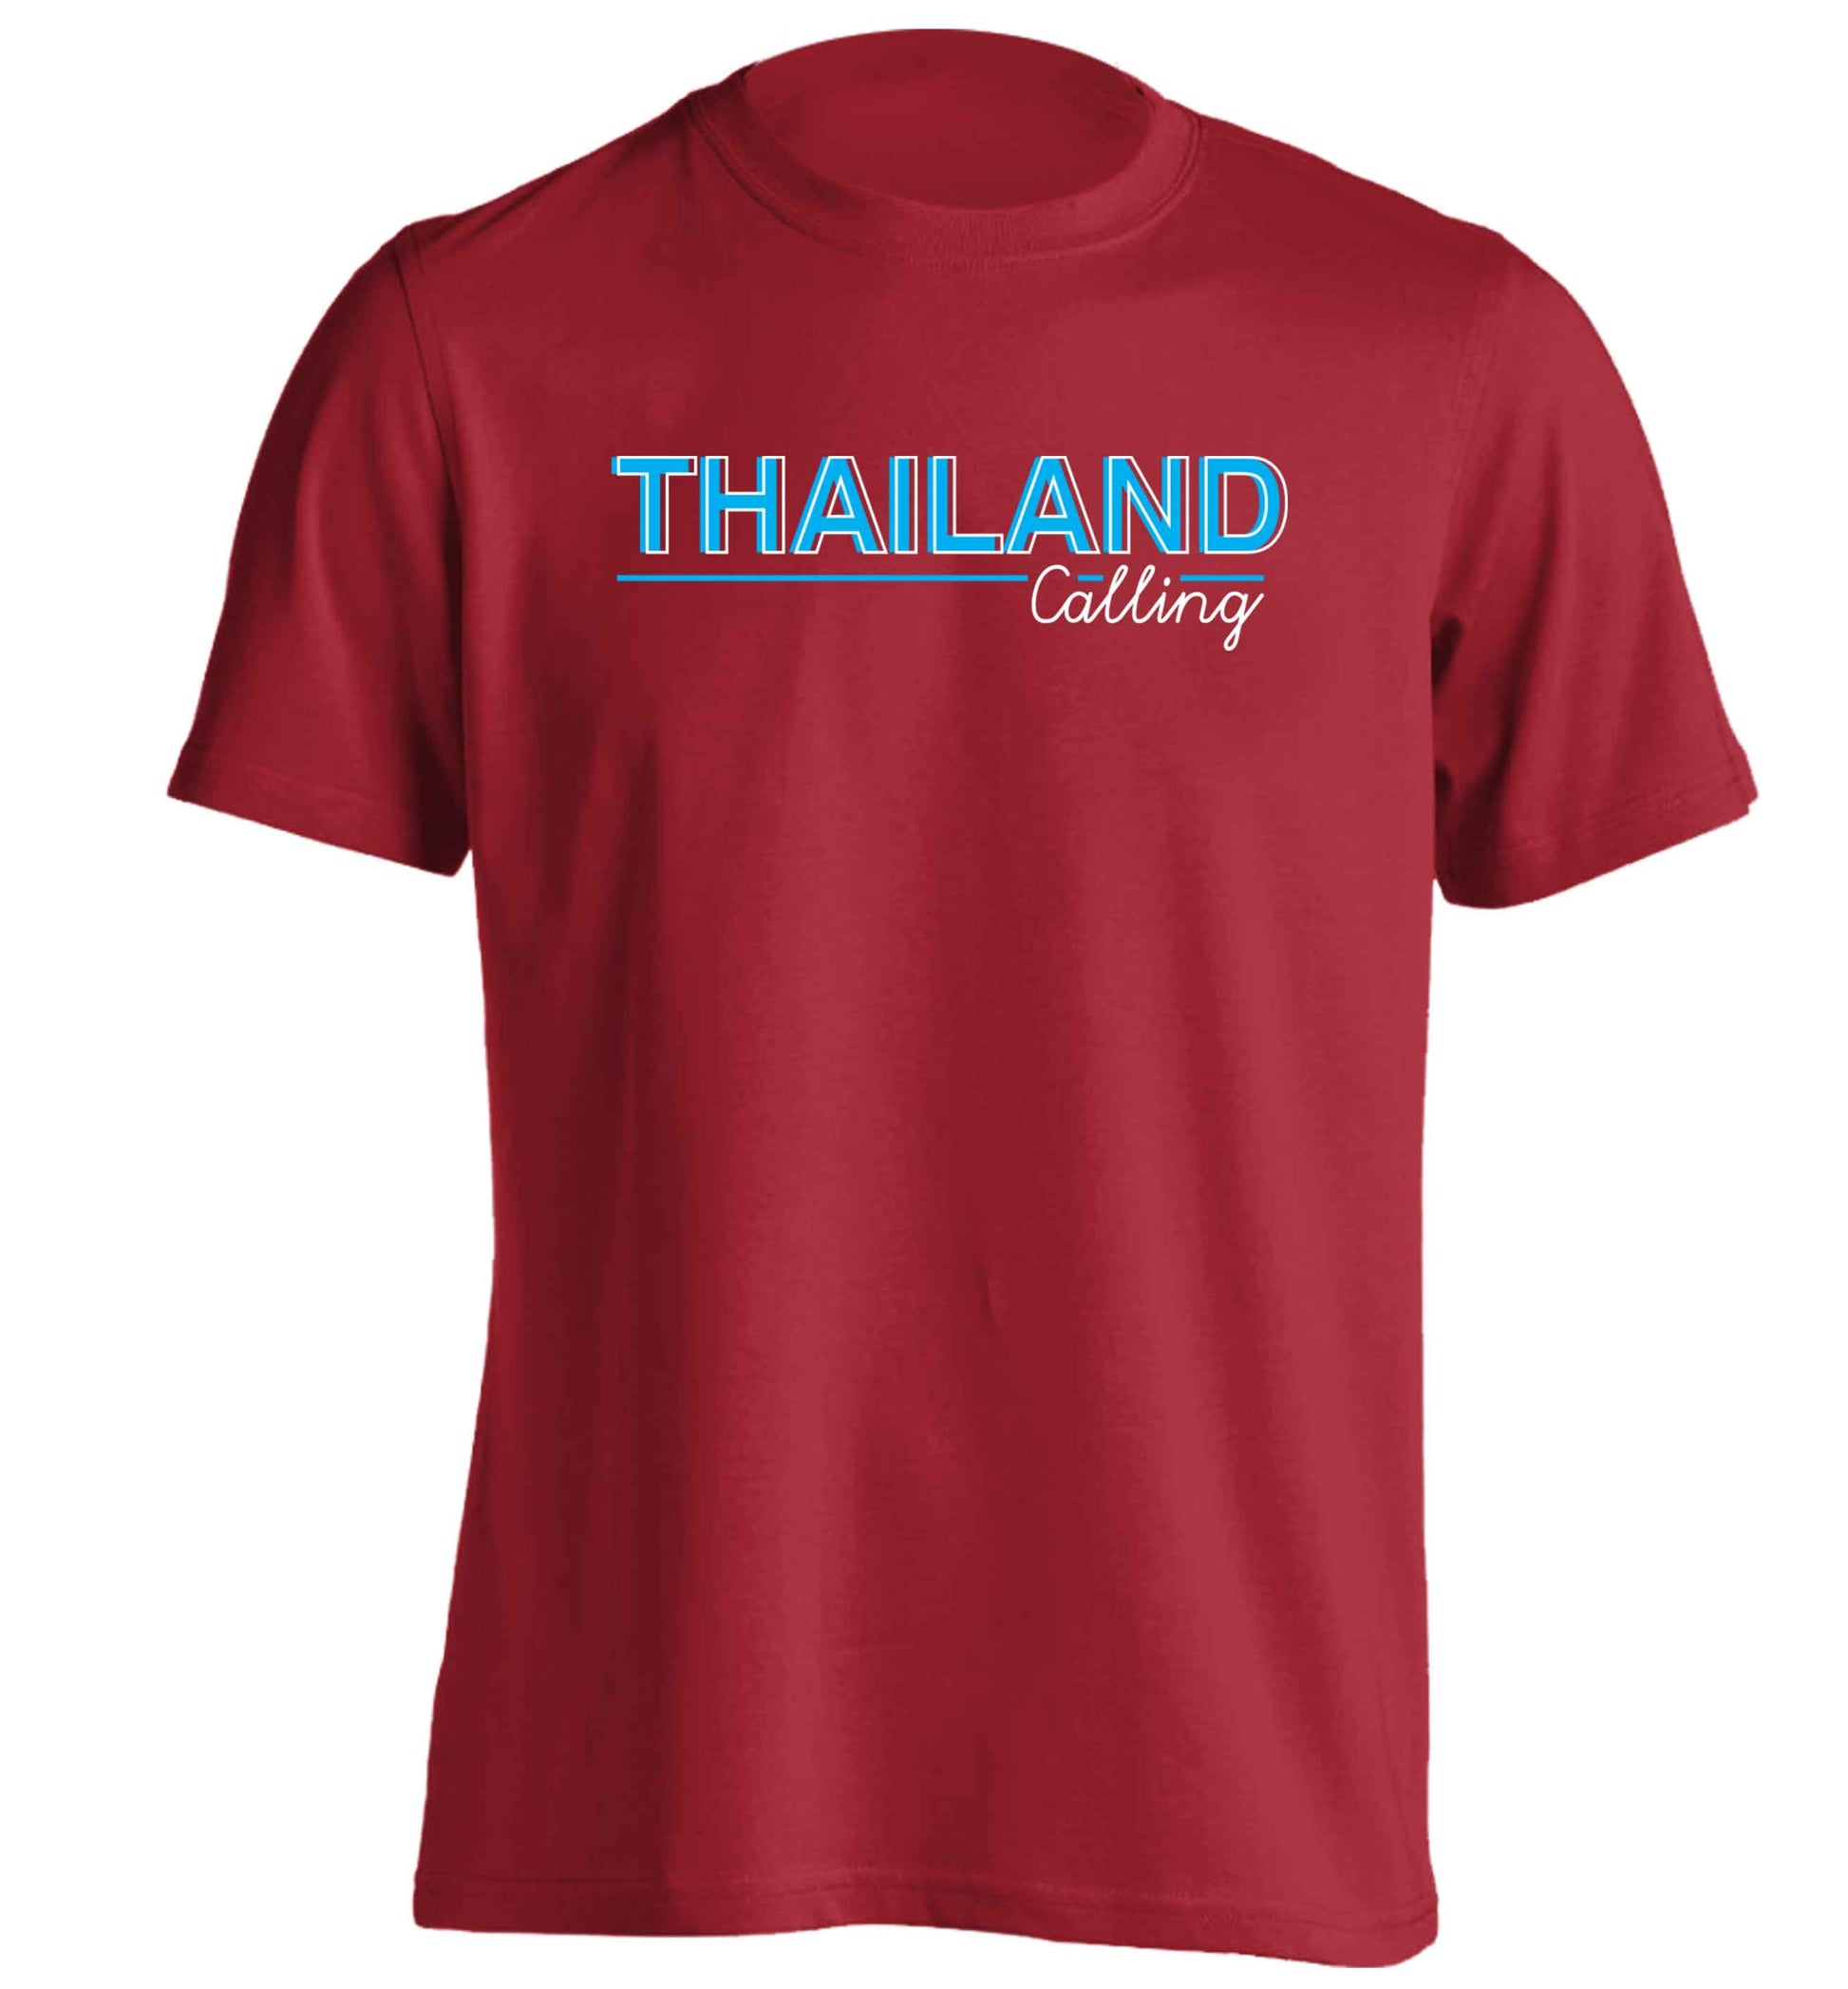 Thailand calling adults unisex red Tshirt 2XL